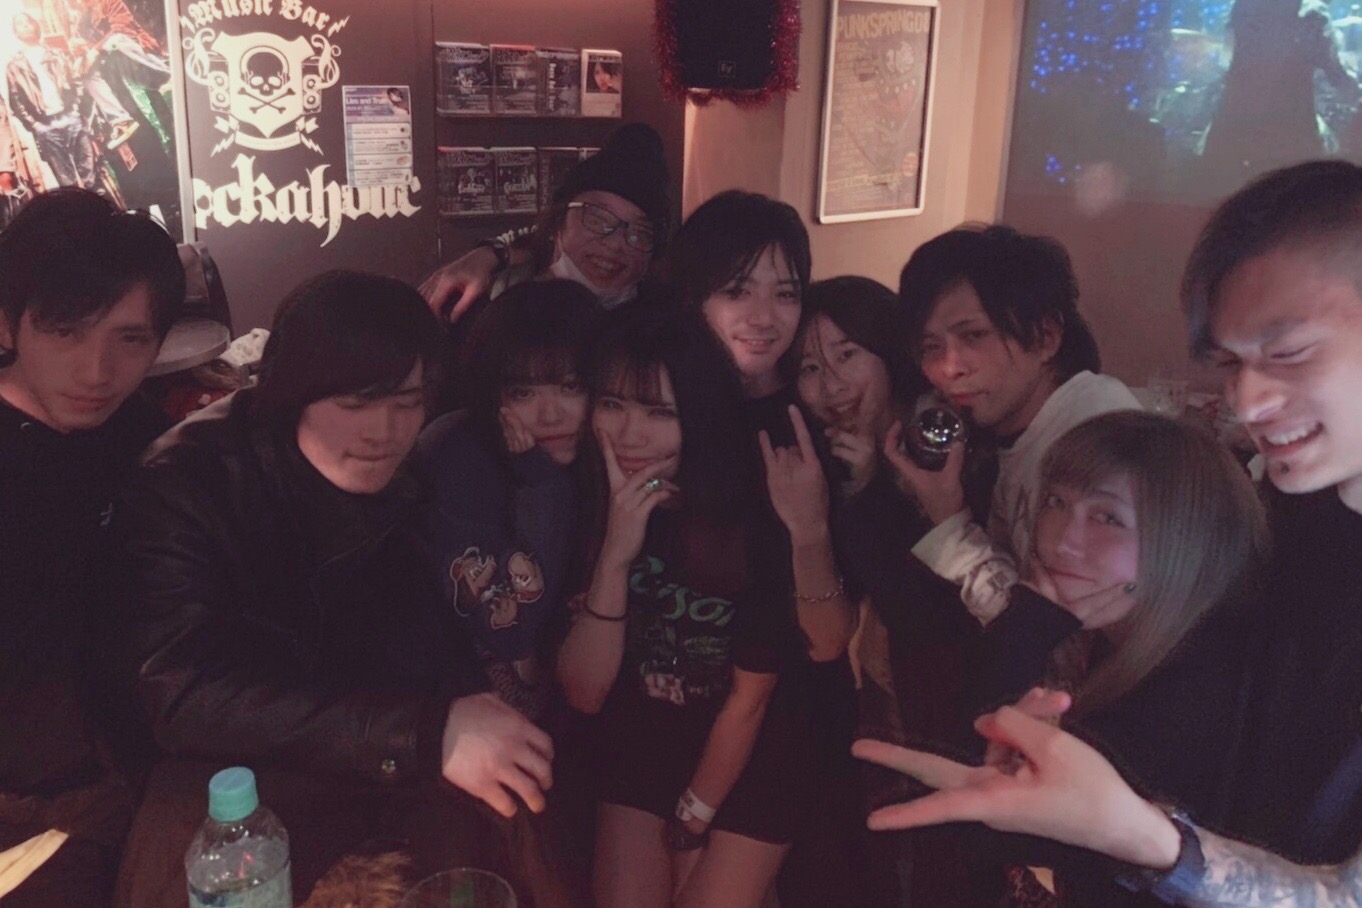 https://bar-rockaholic.jp/shibuya/blog/0B07FC40-2573-4543-8BF3-9685DEDA61B1.jpeg